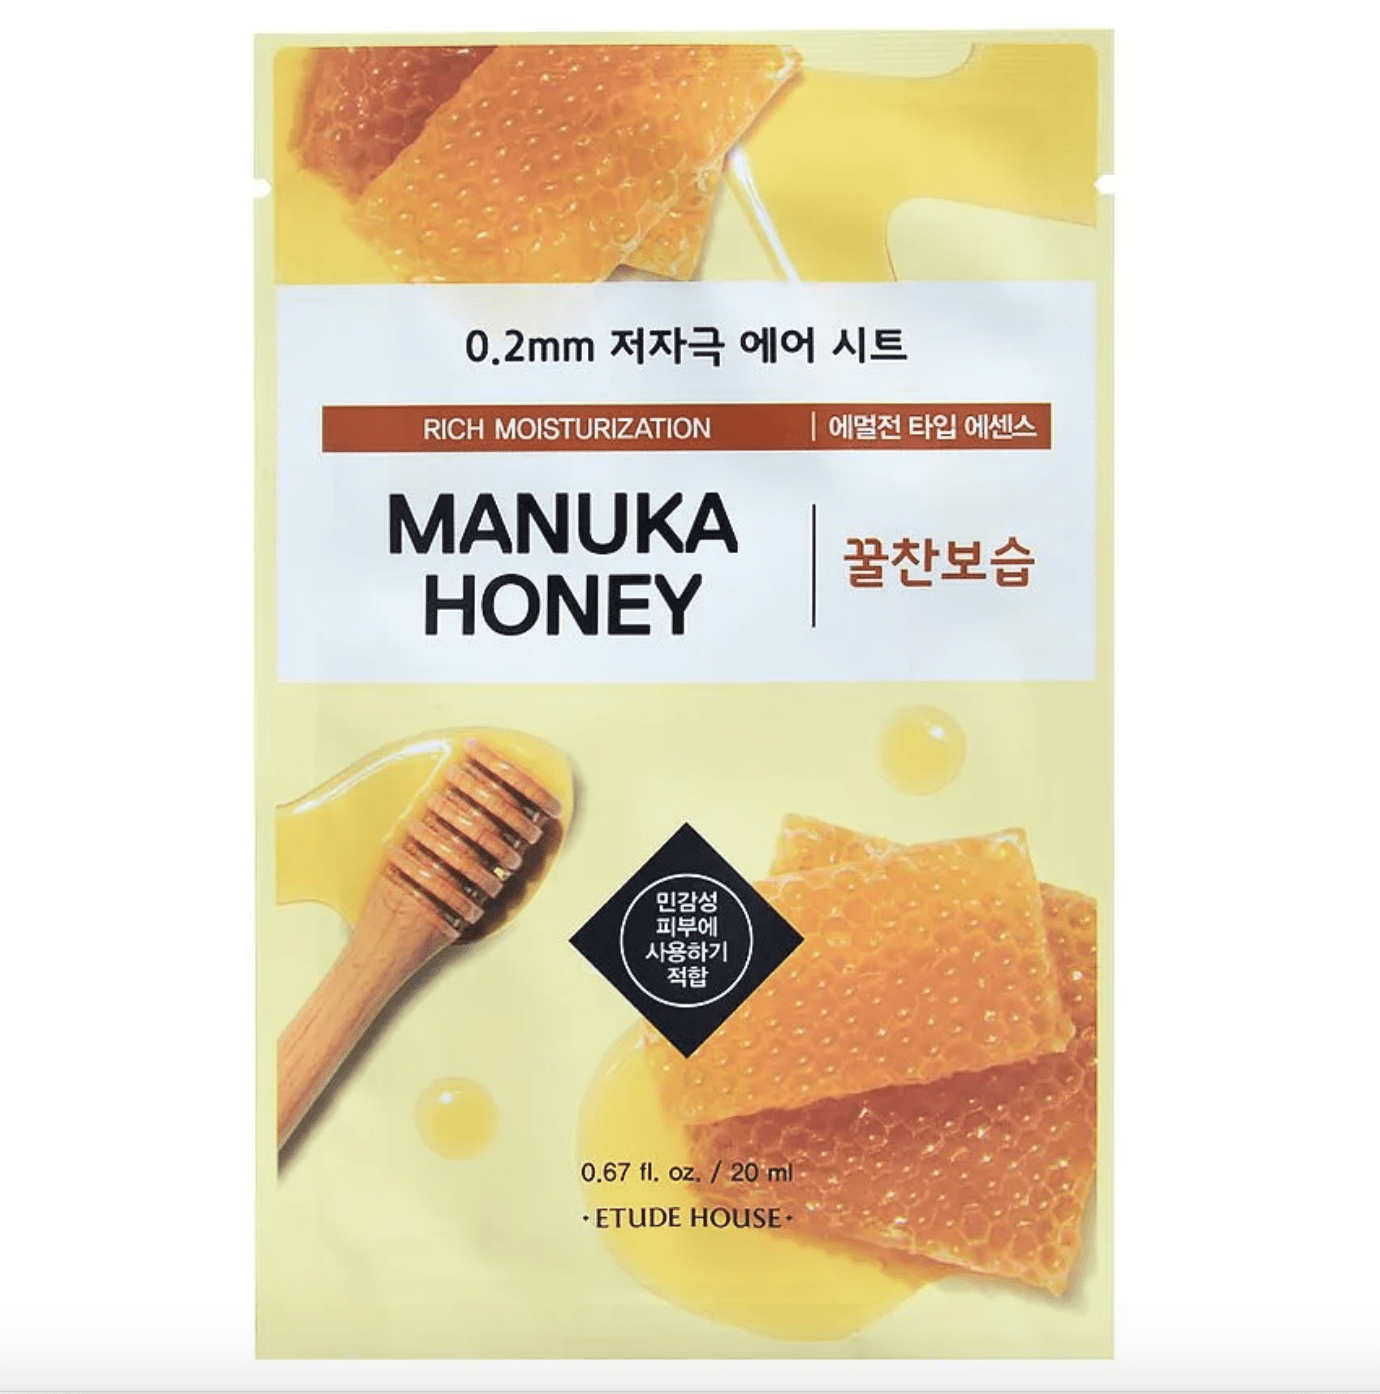 0.2mm Therapy Air Mask #Manuka Honey